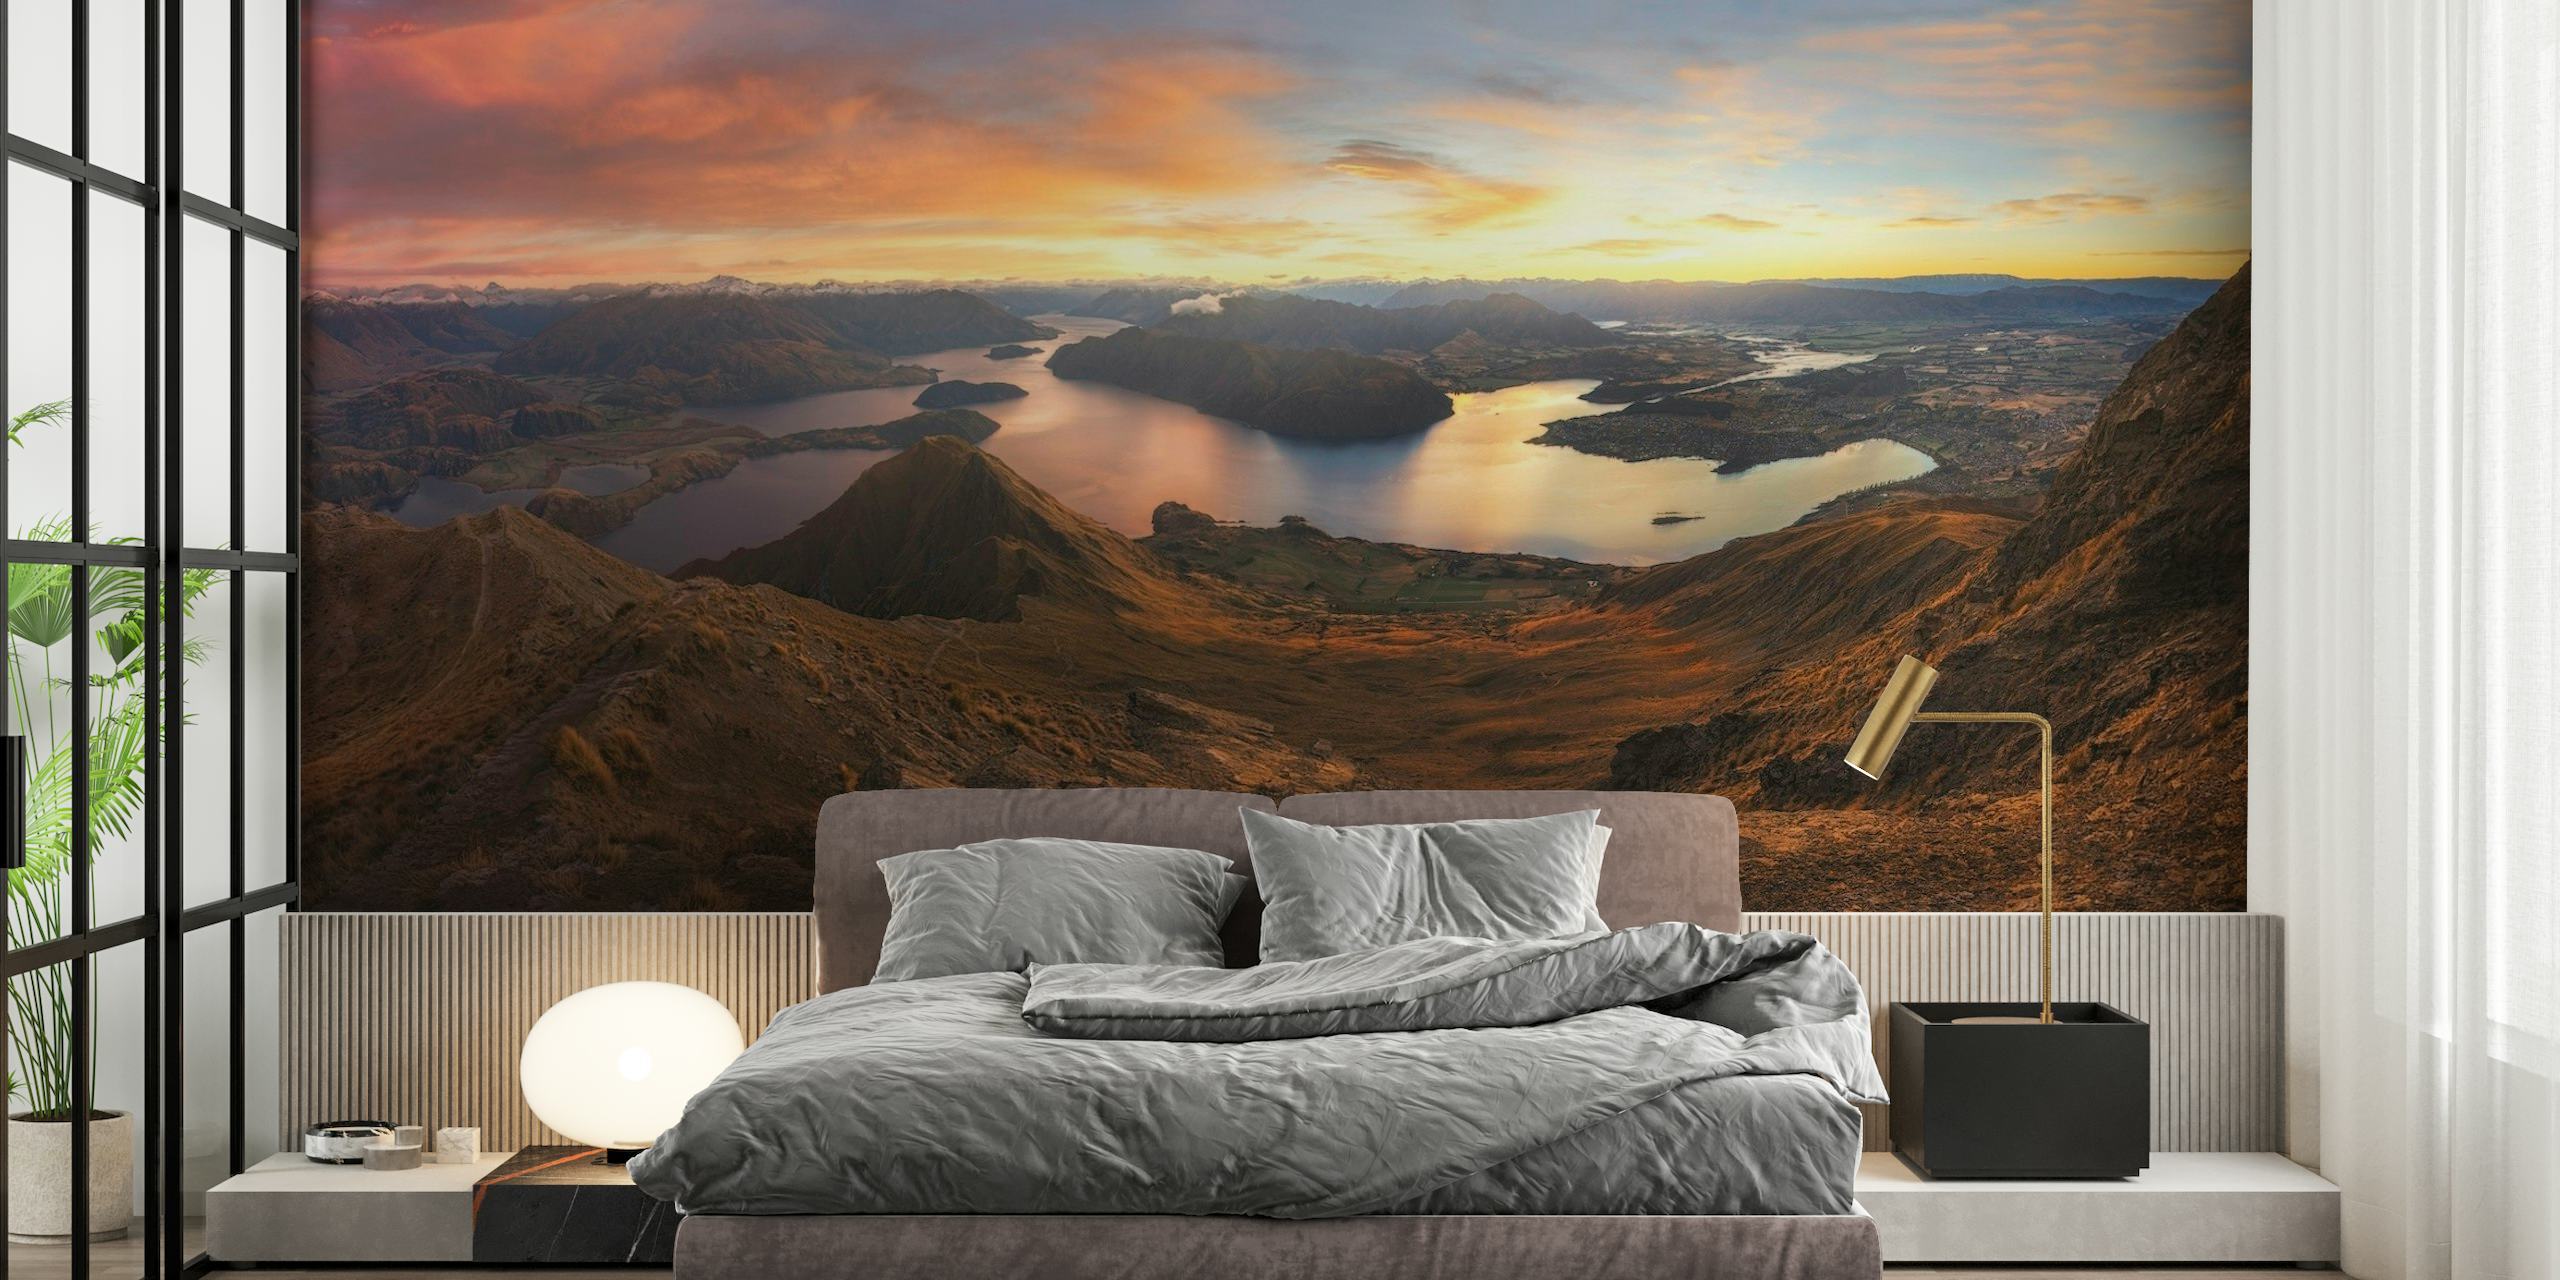 Roys Peak Panorama View-vægmaleri med solopgang over en fredfyldt sø og forrevne bjerge.